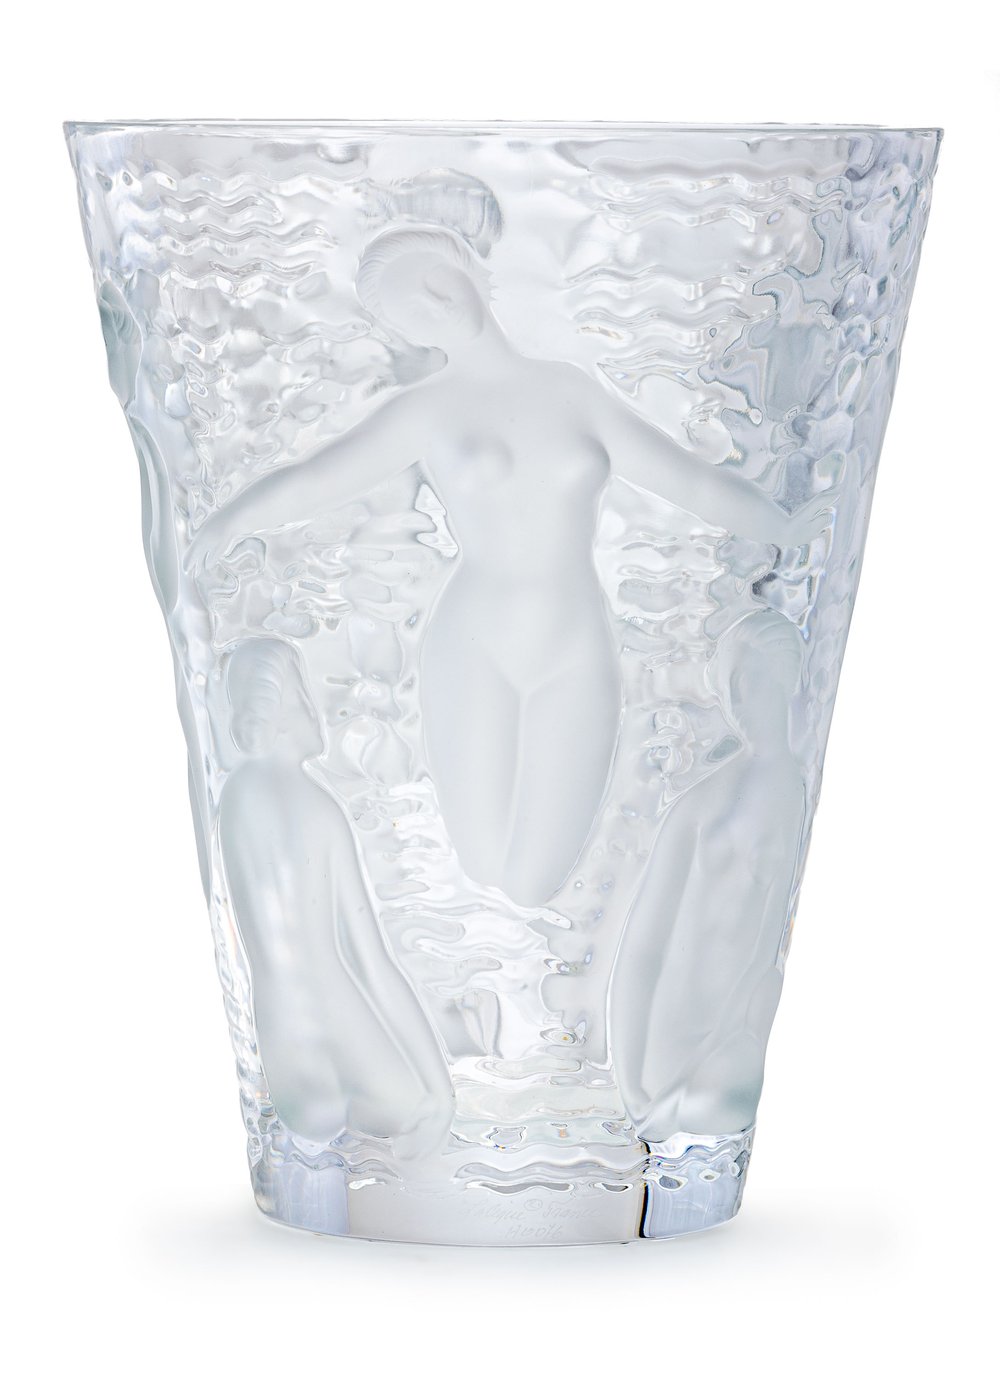 Vase "Ondines" Lalique, France - Image 2 of 5